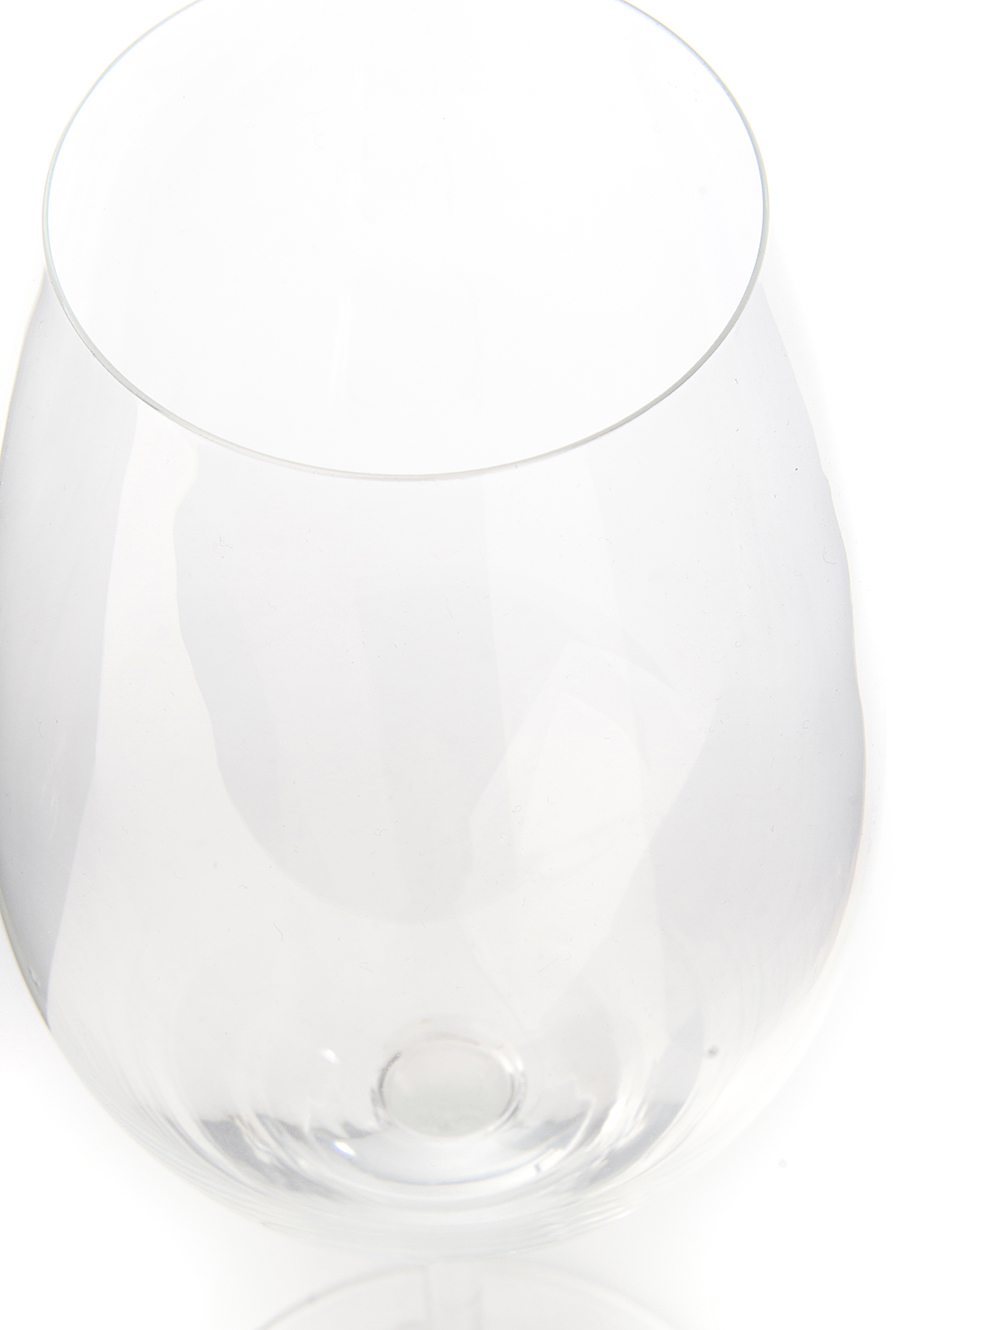 Copa de vino transparente-COPON RICS - TINTO CSC-Tiendas Landmark-1.jpg image number null